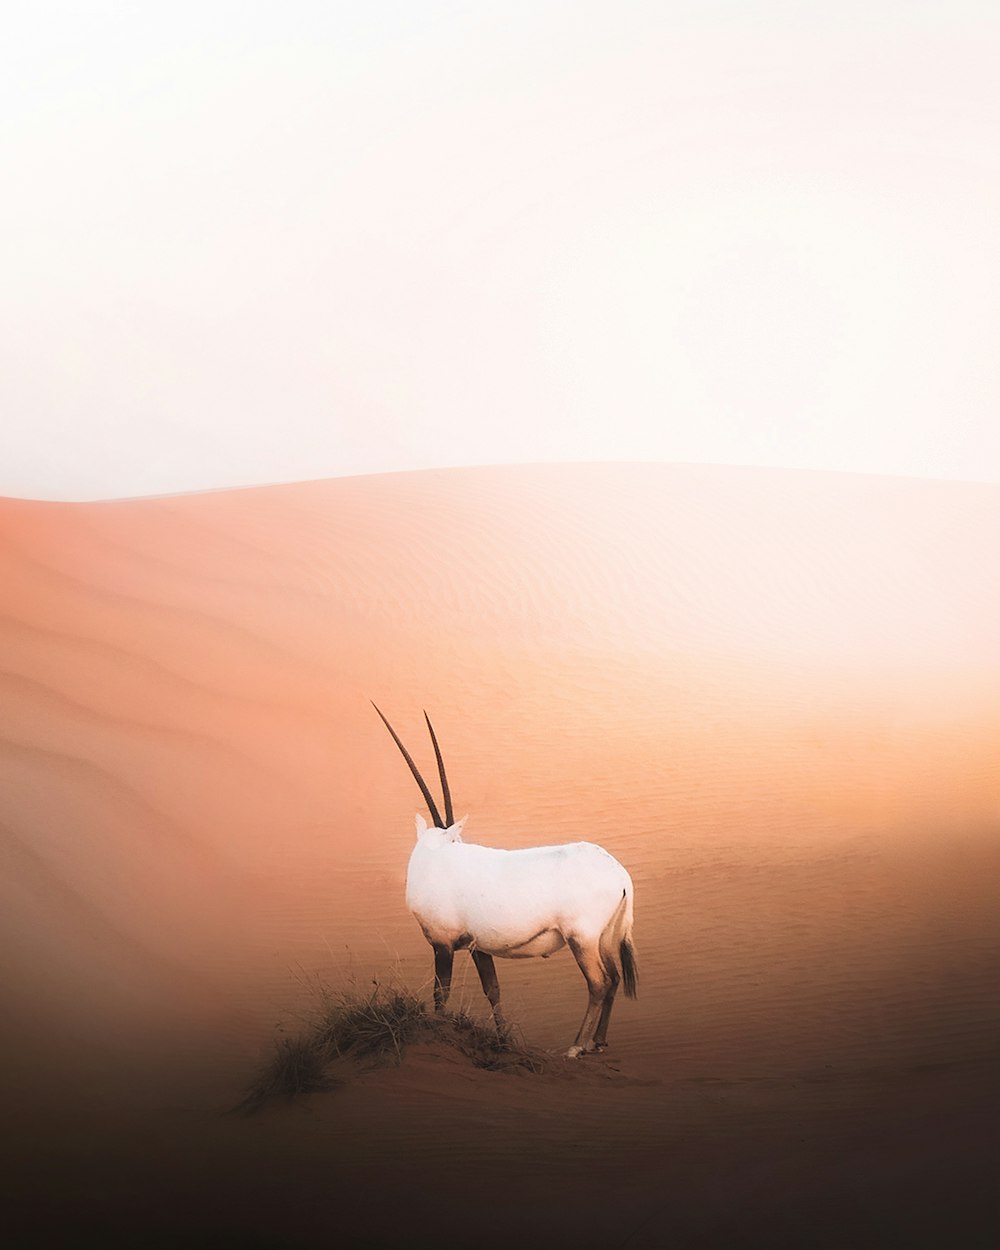 white animal on desert during daytime